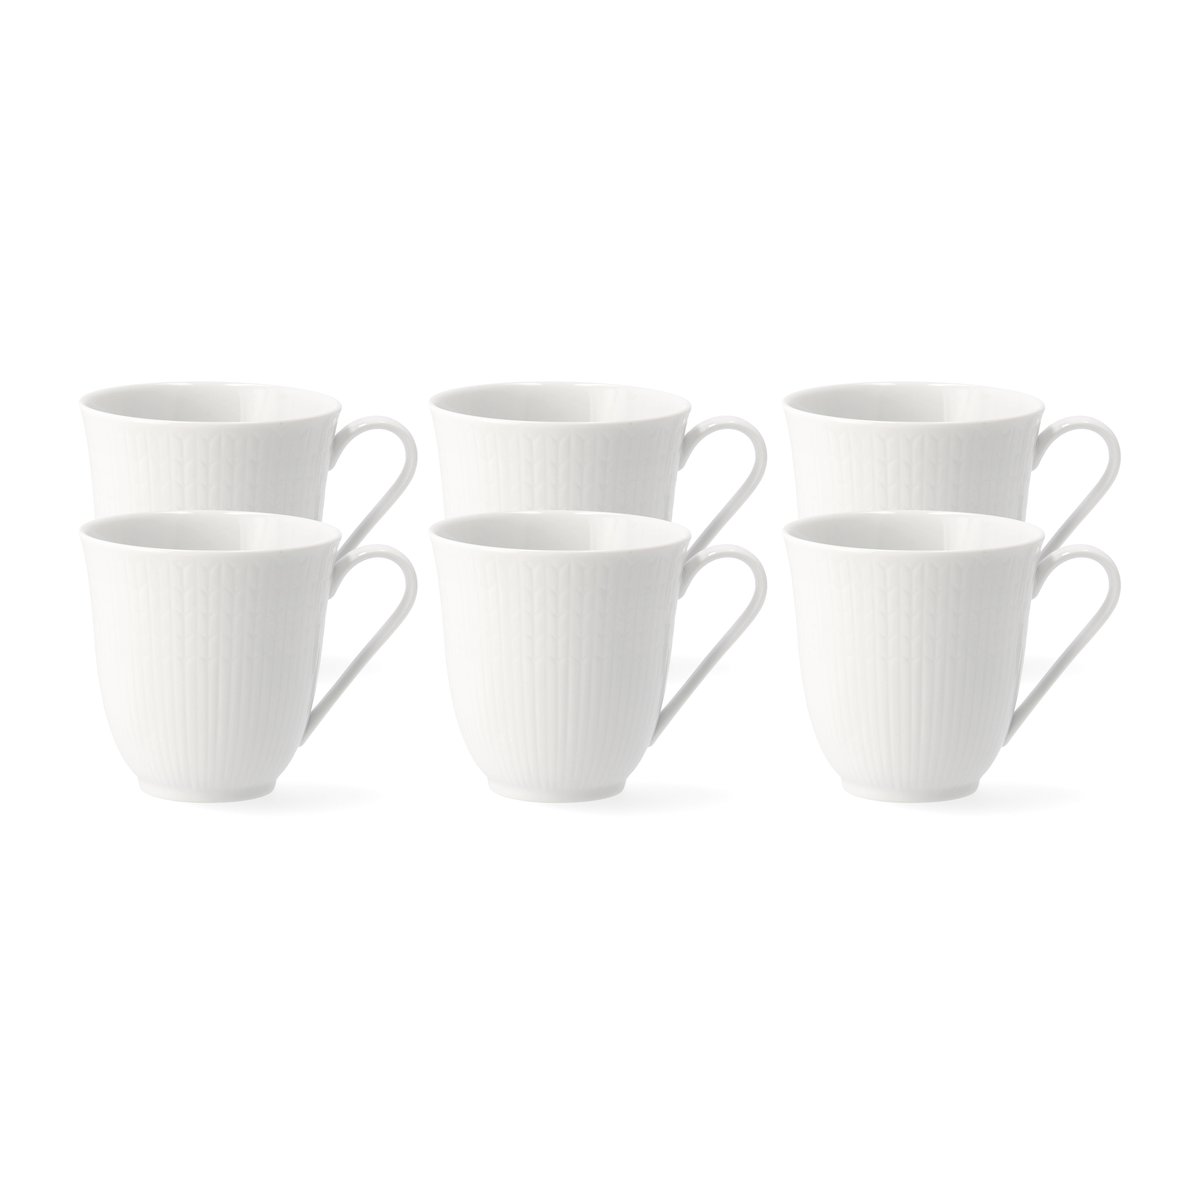 rörstrand mug swedish grace 30 cl, lot de 6 snö (blanc) blanc